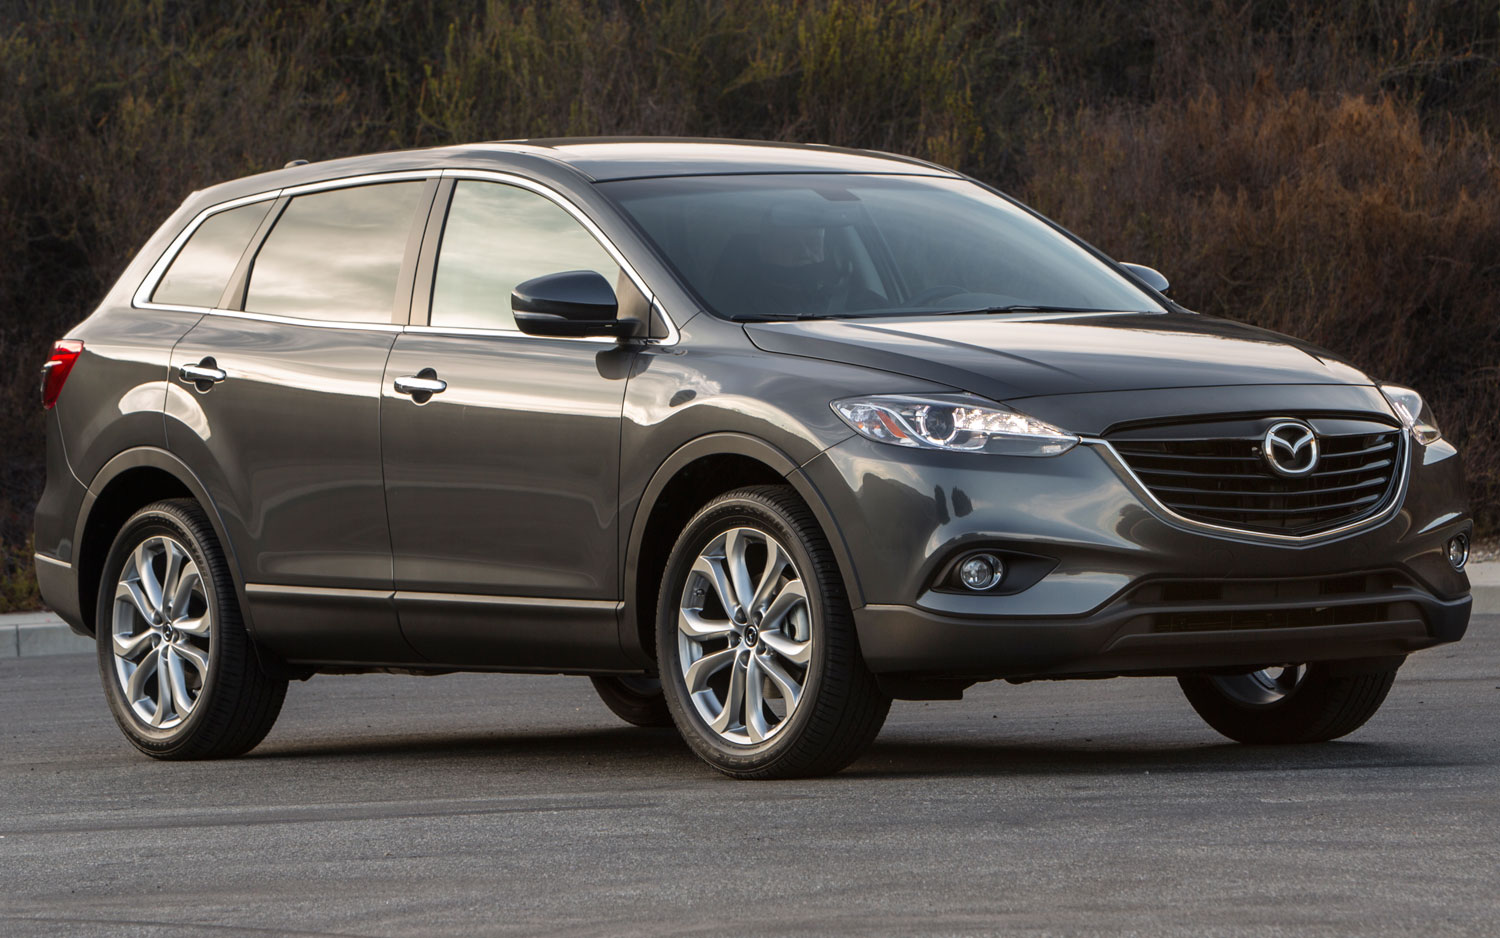 Details, Pricing on Updated U.S.-Spec 2013 Mazda CX-9 Released